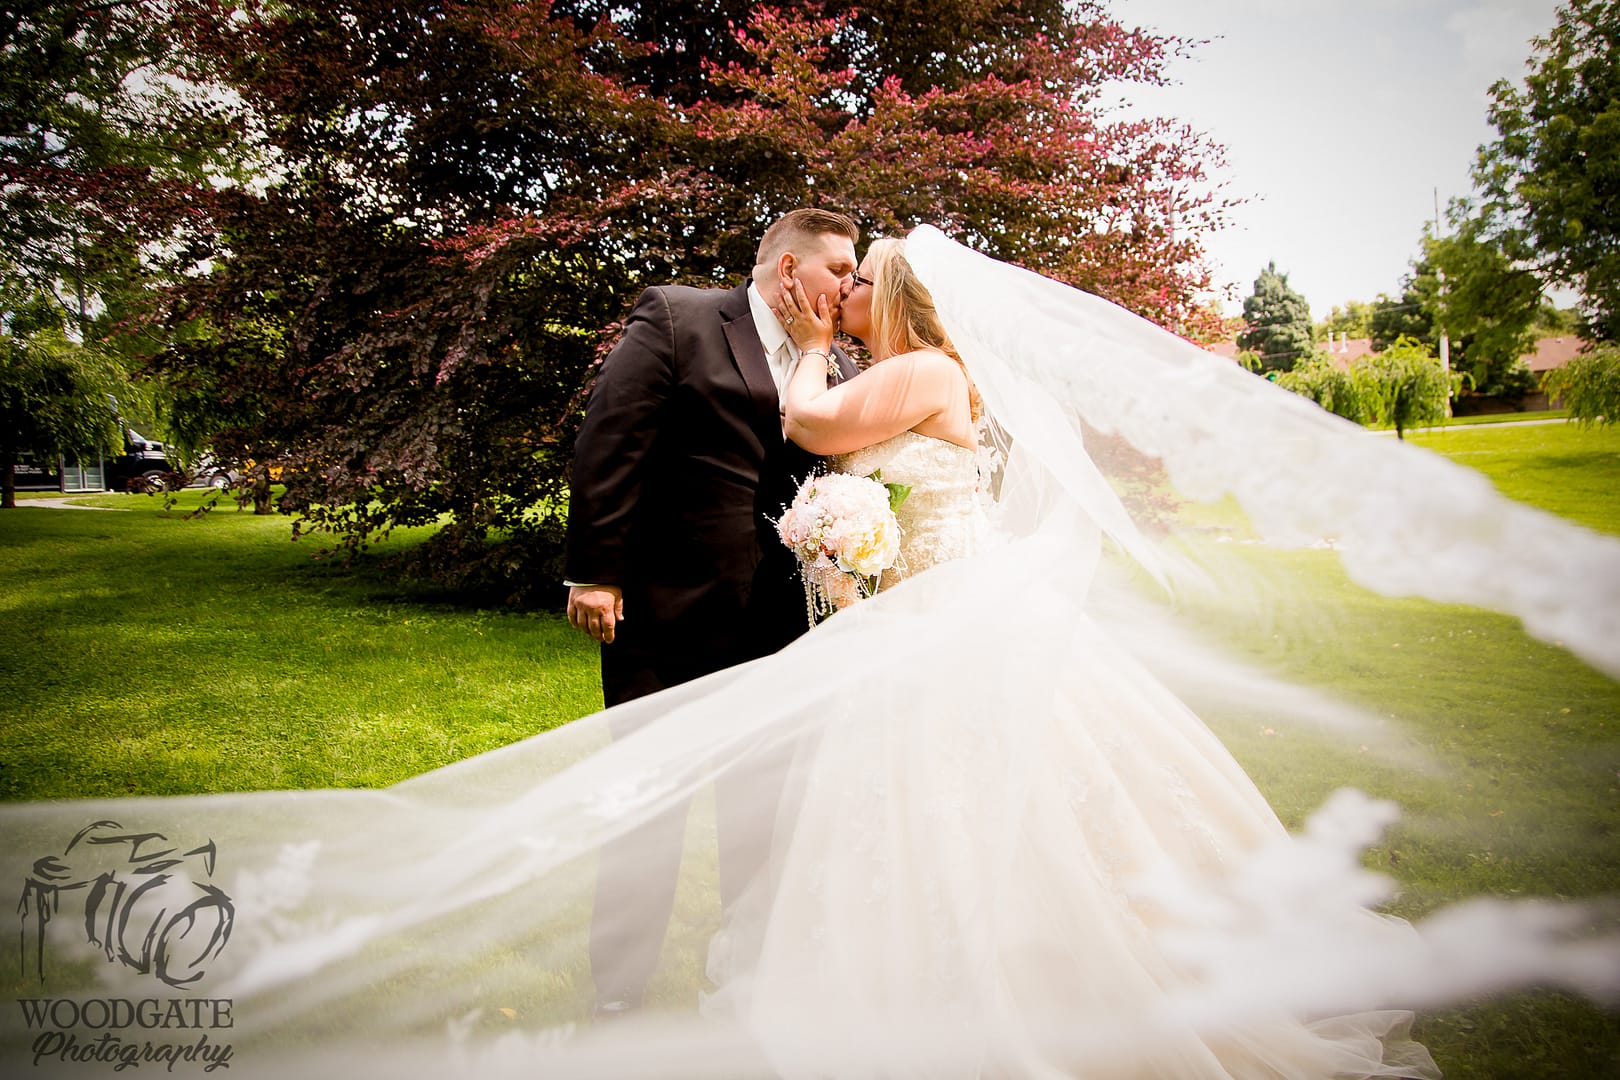 St Thomas Wedding Photographer, St Thomas Wedding Photography, Ontario Wedding Photography, Civic Gardens Wedding Photography, London Ontario Wedding Photography, Wedding photographer london ontario